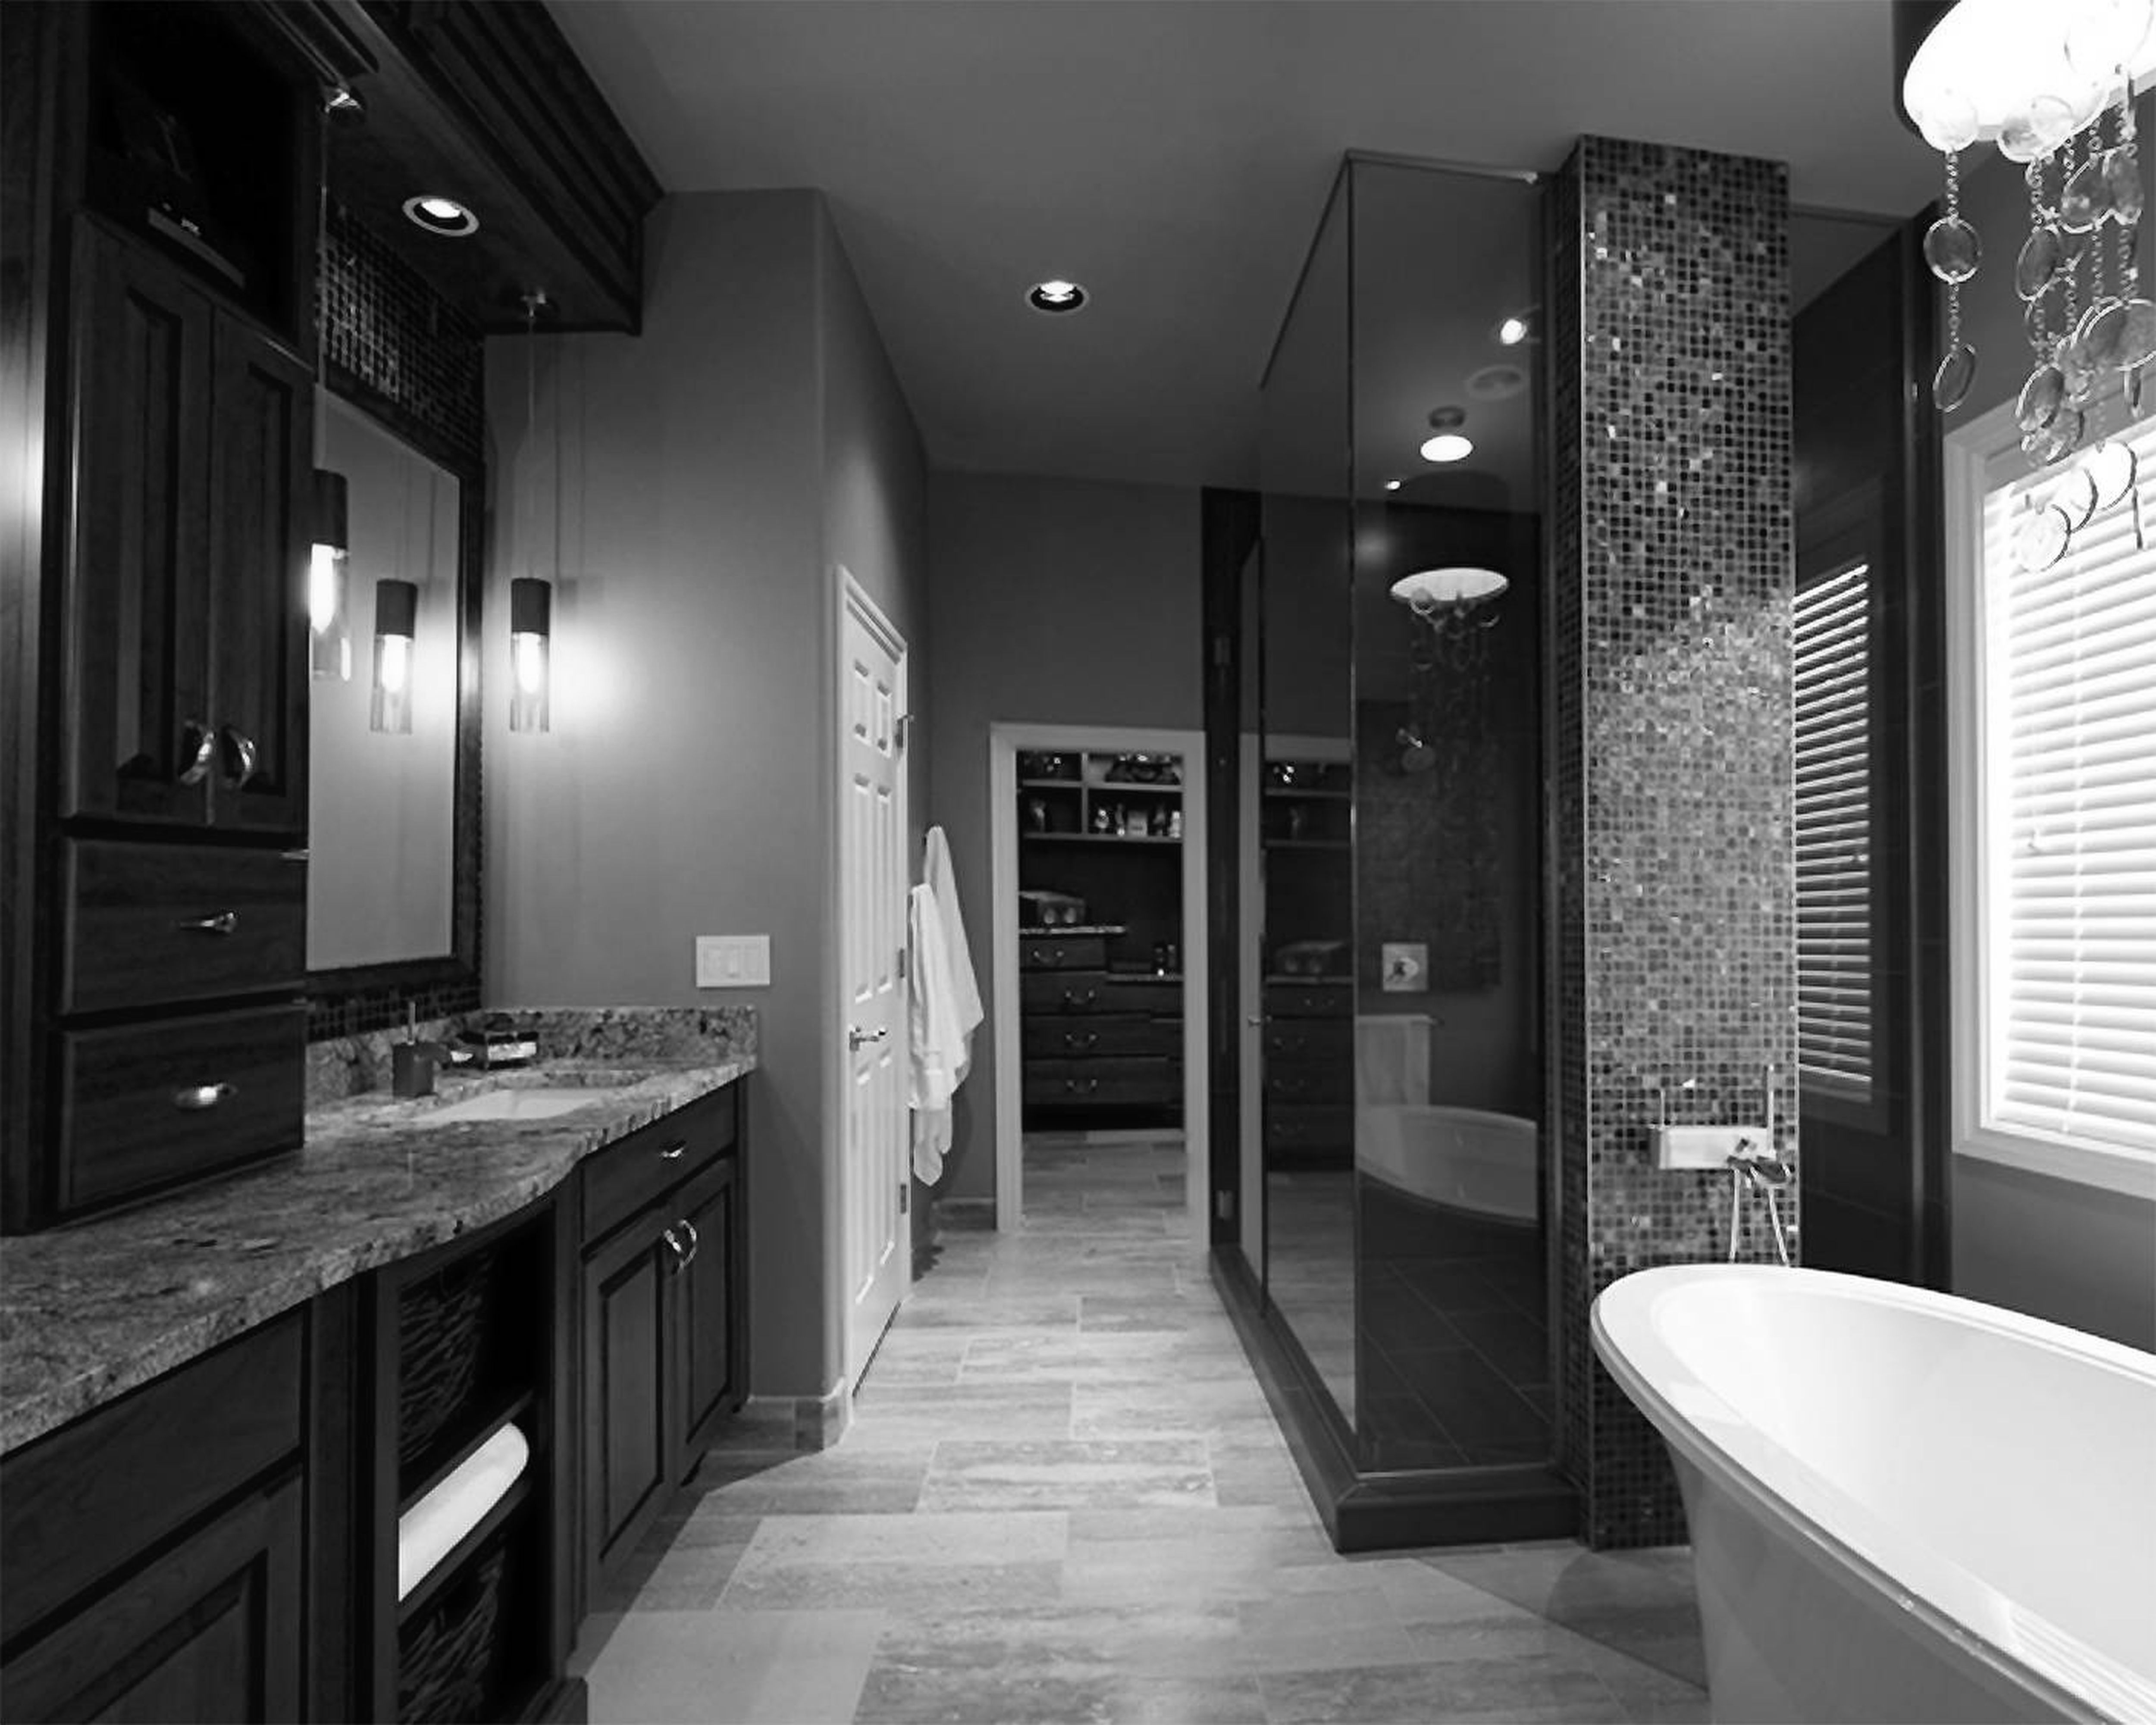 inspiration-bathroom-inspiring-marble-bathroom-floor-tile-ideas-with-white-soaking-bathtub-as-well-as-black-wooden-vanity-mirror-in-halley-black-and-white-bathroom-decors-20-exceptional-black-and-whi